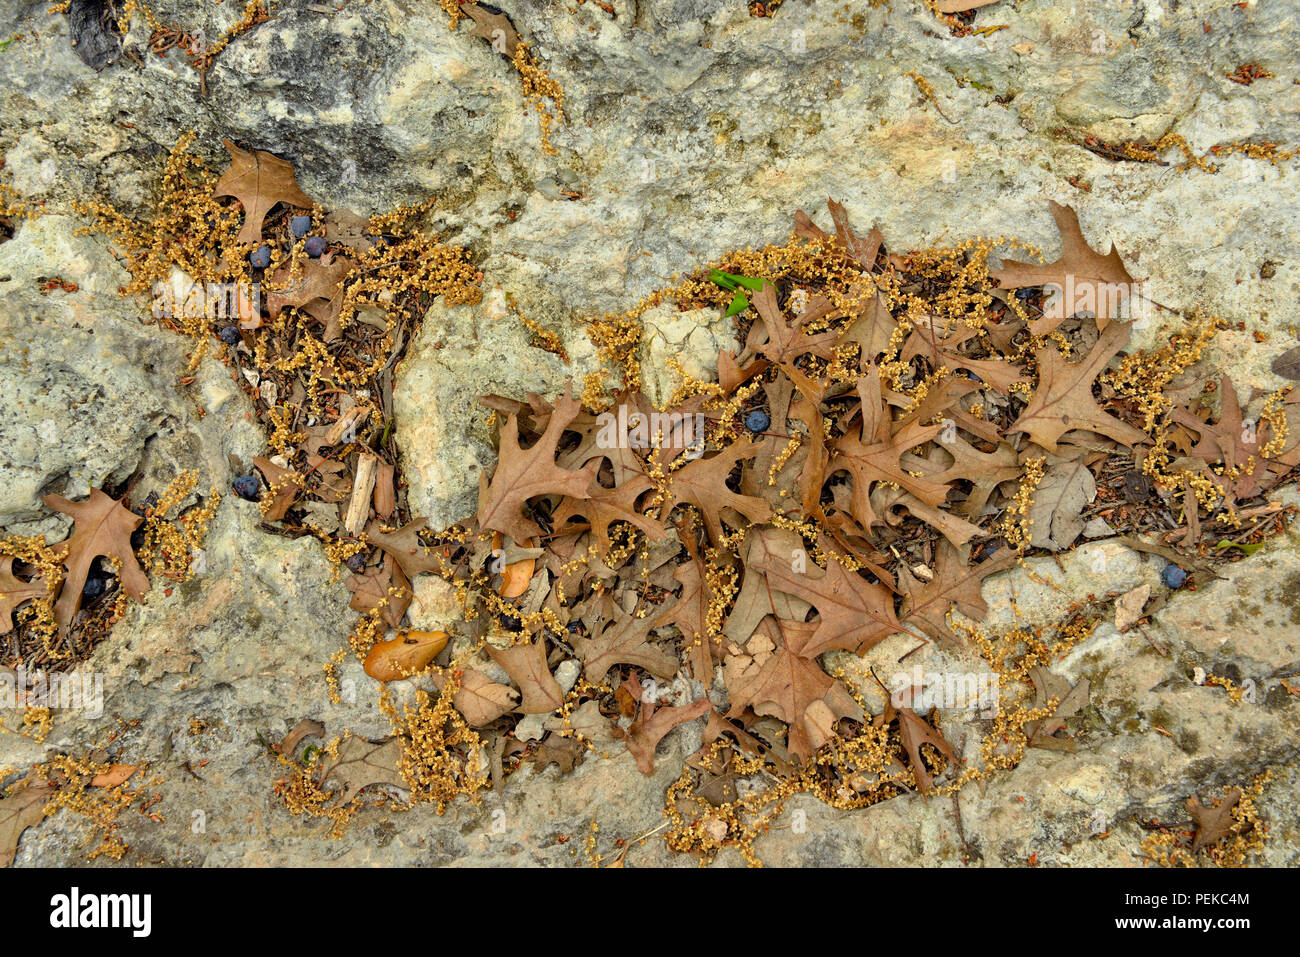 Limestone outcrop with fallen oak leaves, Balconies Canyonlands NWR, Texas, USA Stock Photo